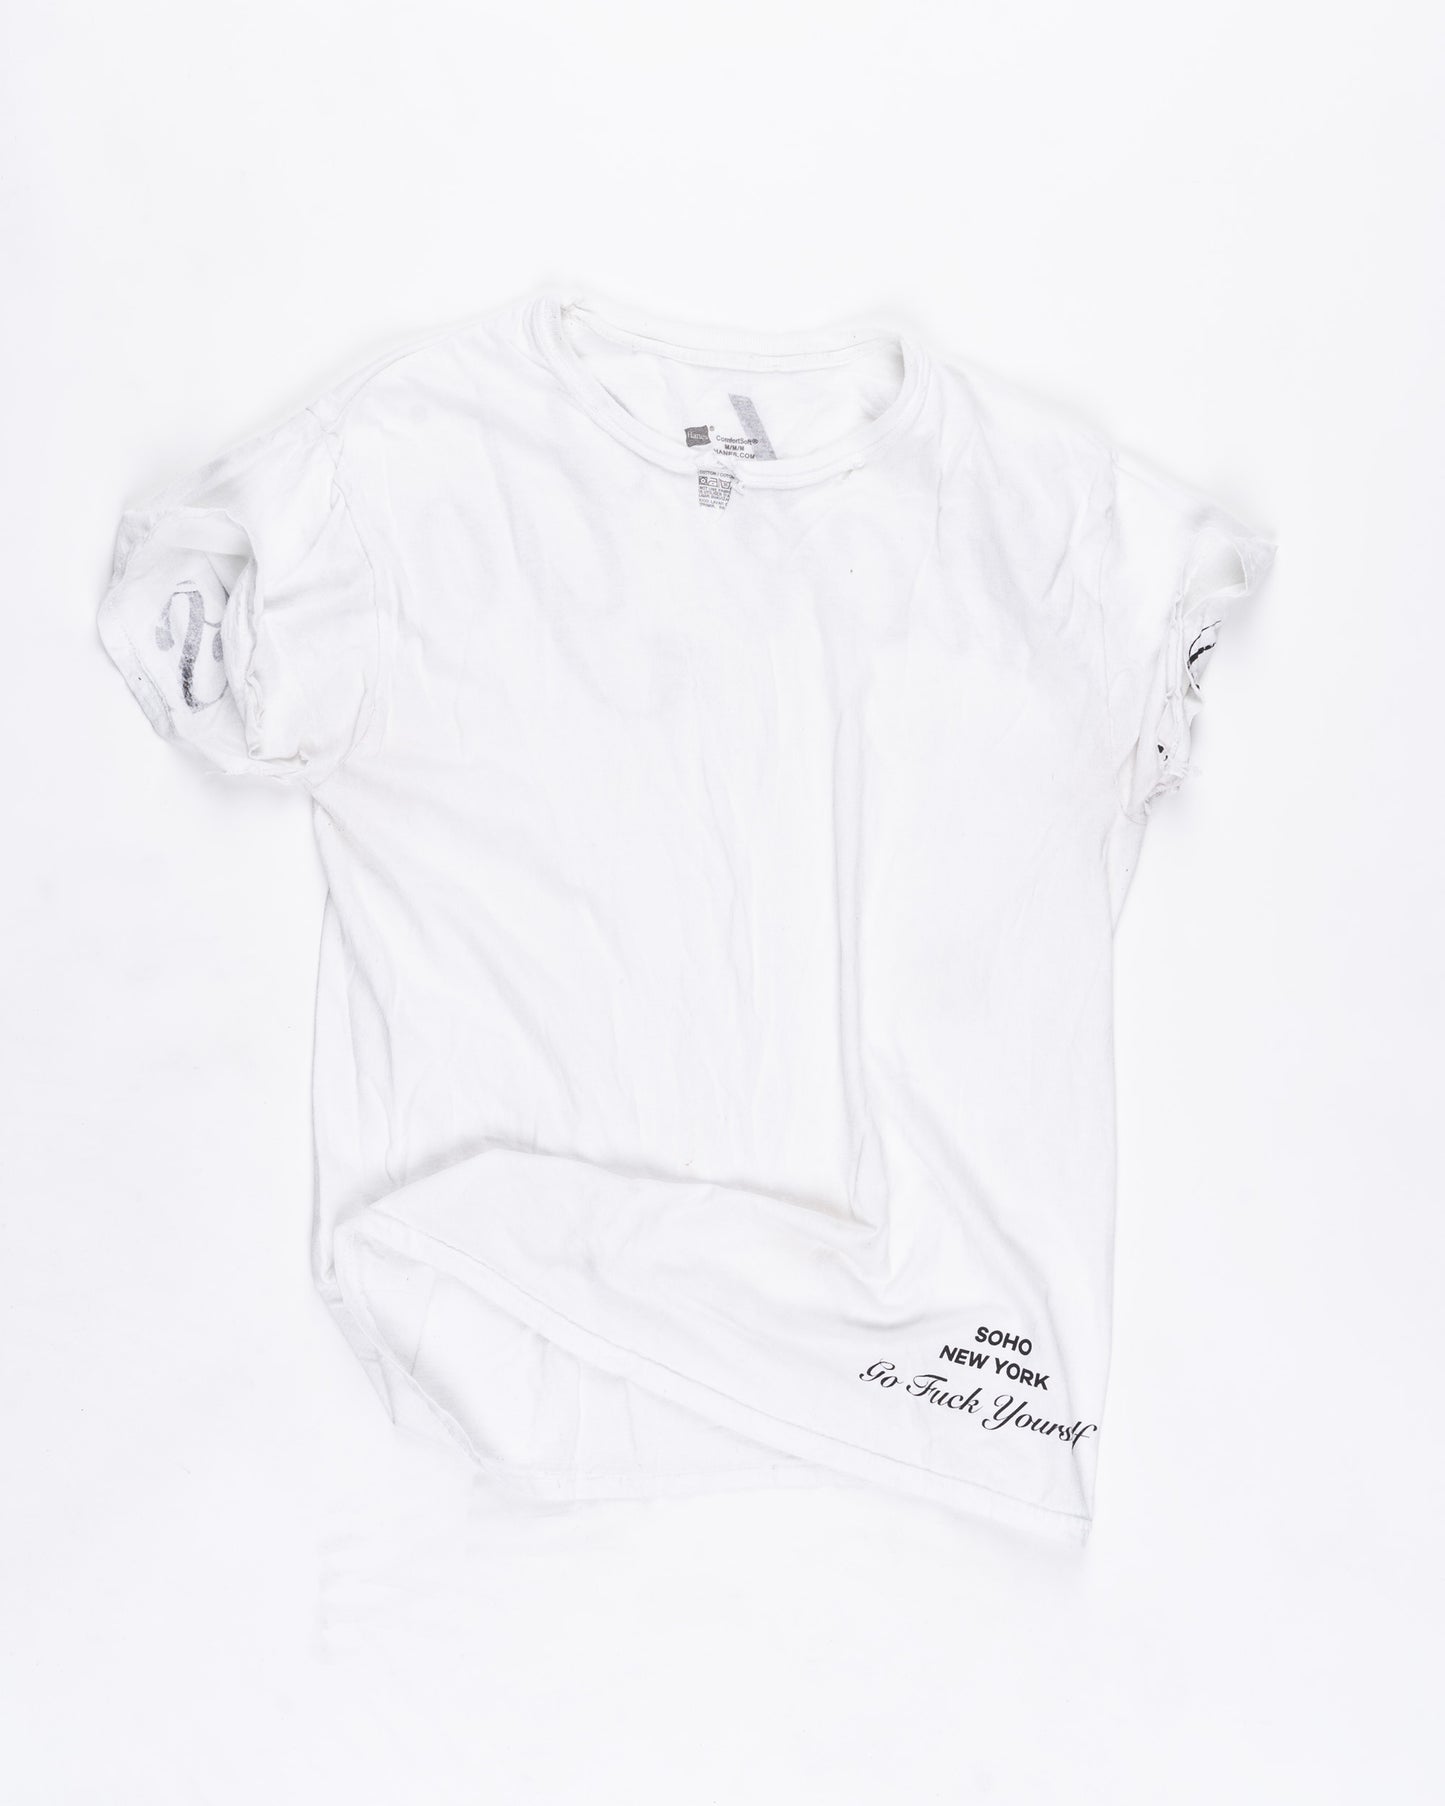 White With Black Print T-Shirt Size: XLarge